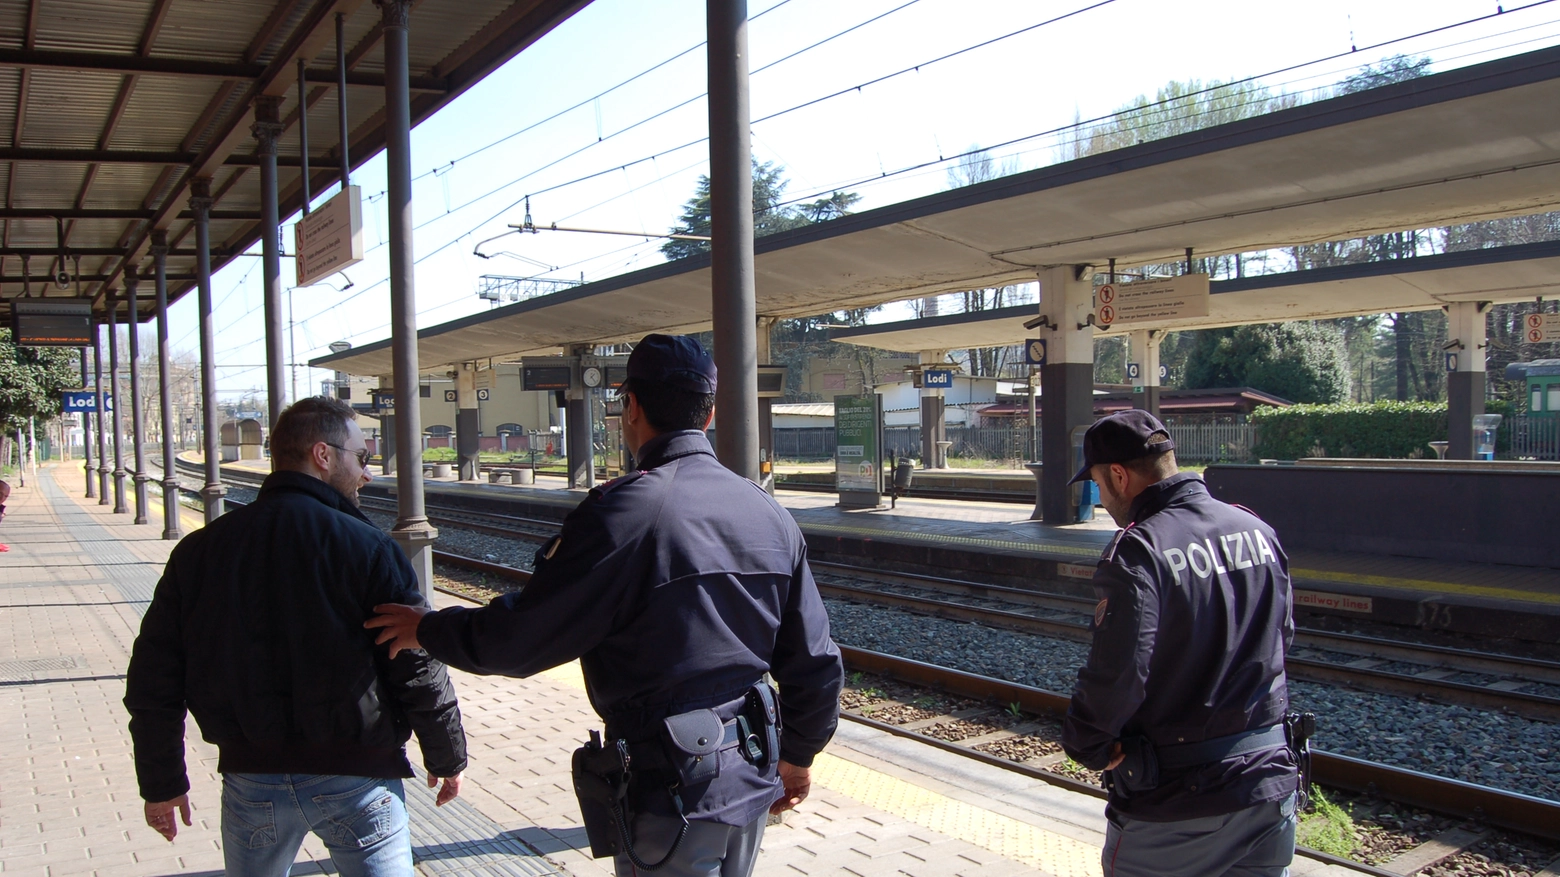 Polizia in stazione a Lodi